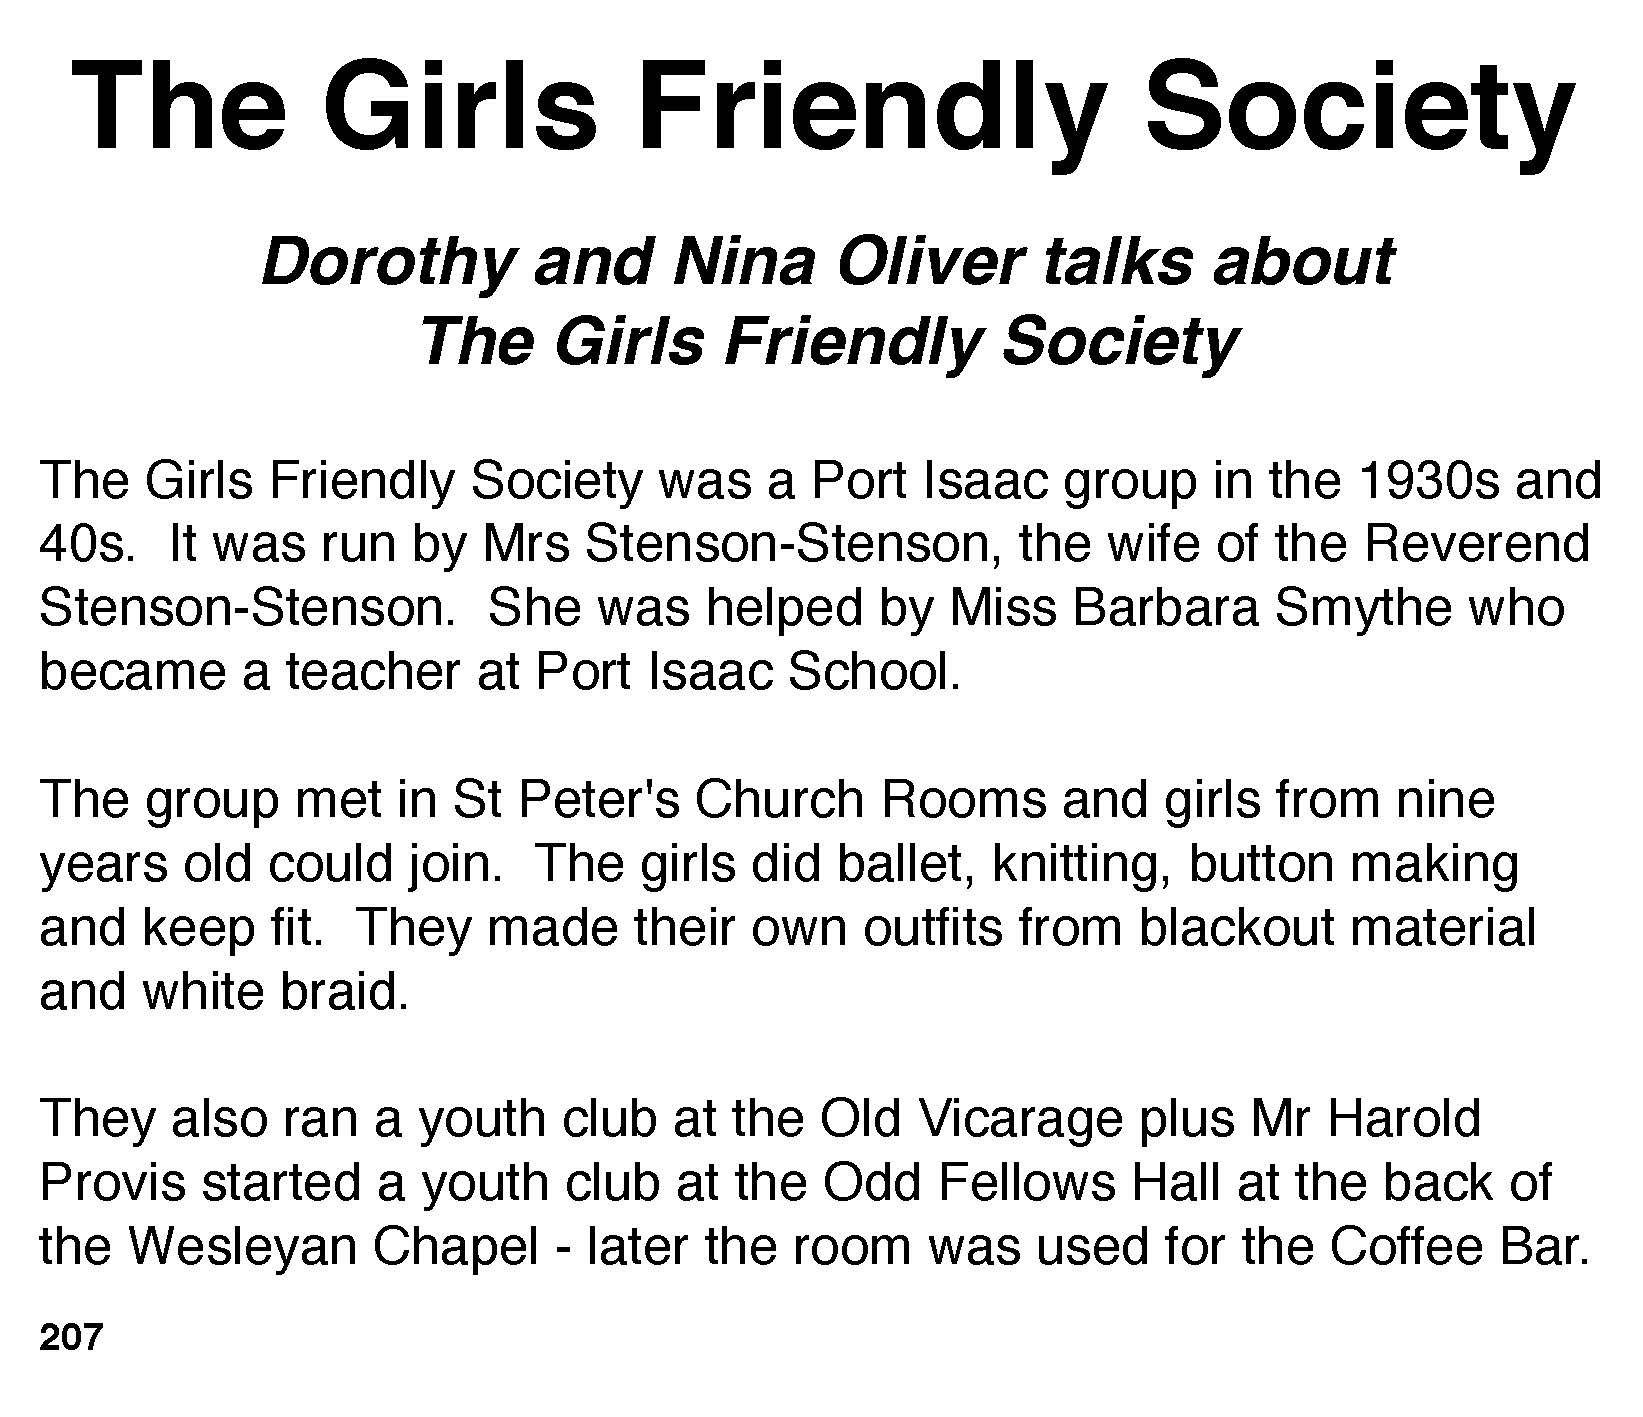 The Girls Friendly Society